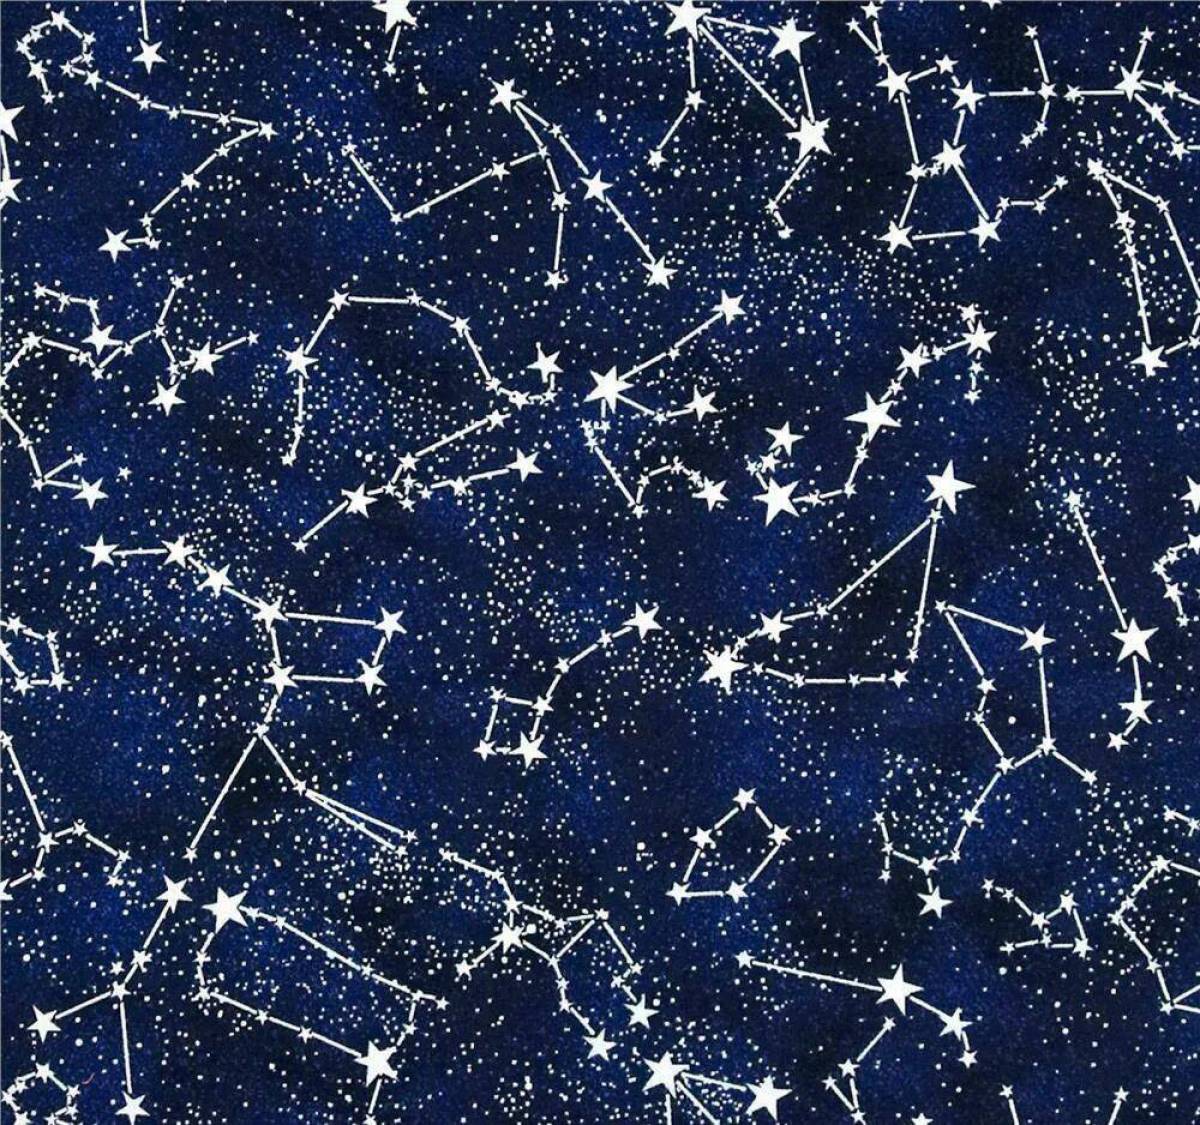 Созвездие на небосклоне. Созвездия на небе. Космос созвездия. Красивые созвездия. Звездное небо созвезди.